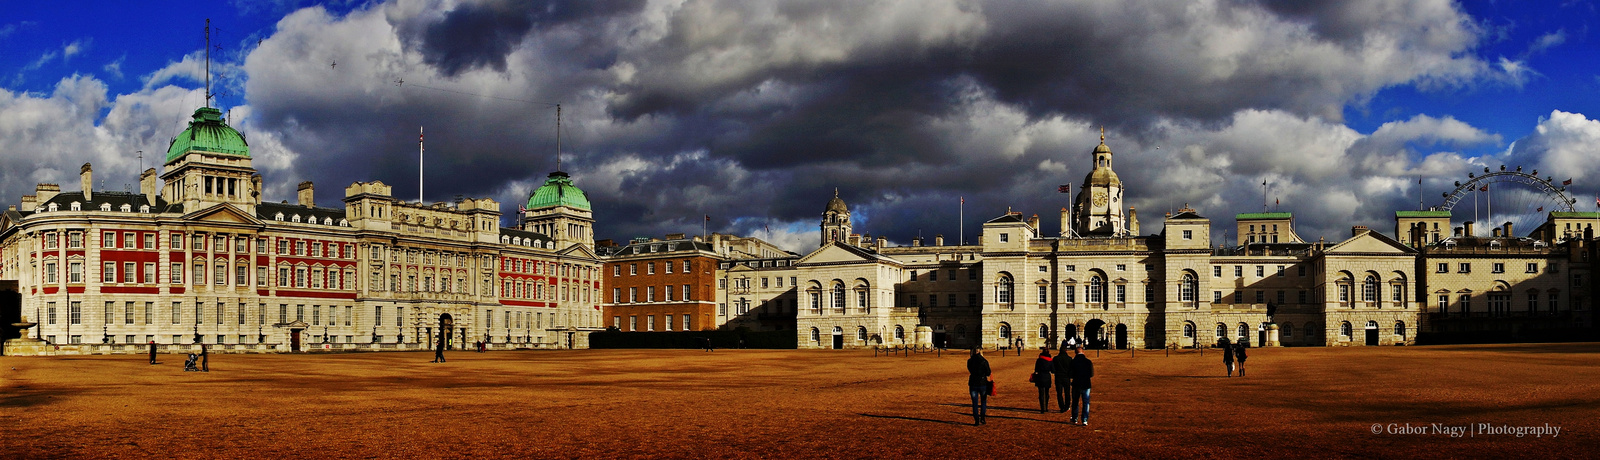 Royal Horse Guards building